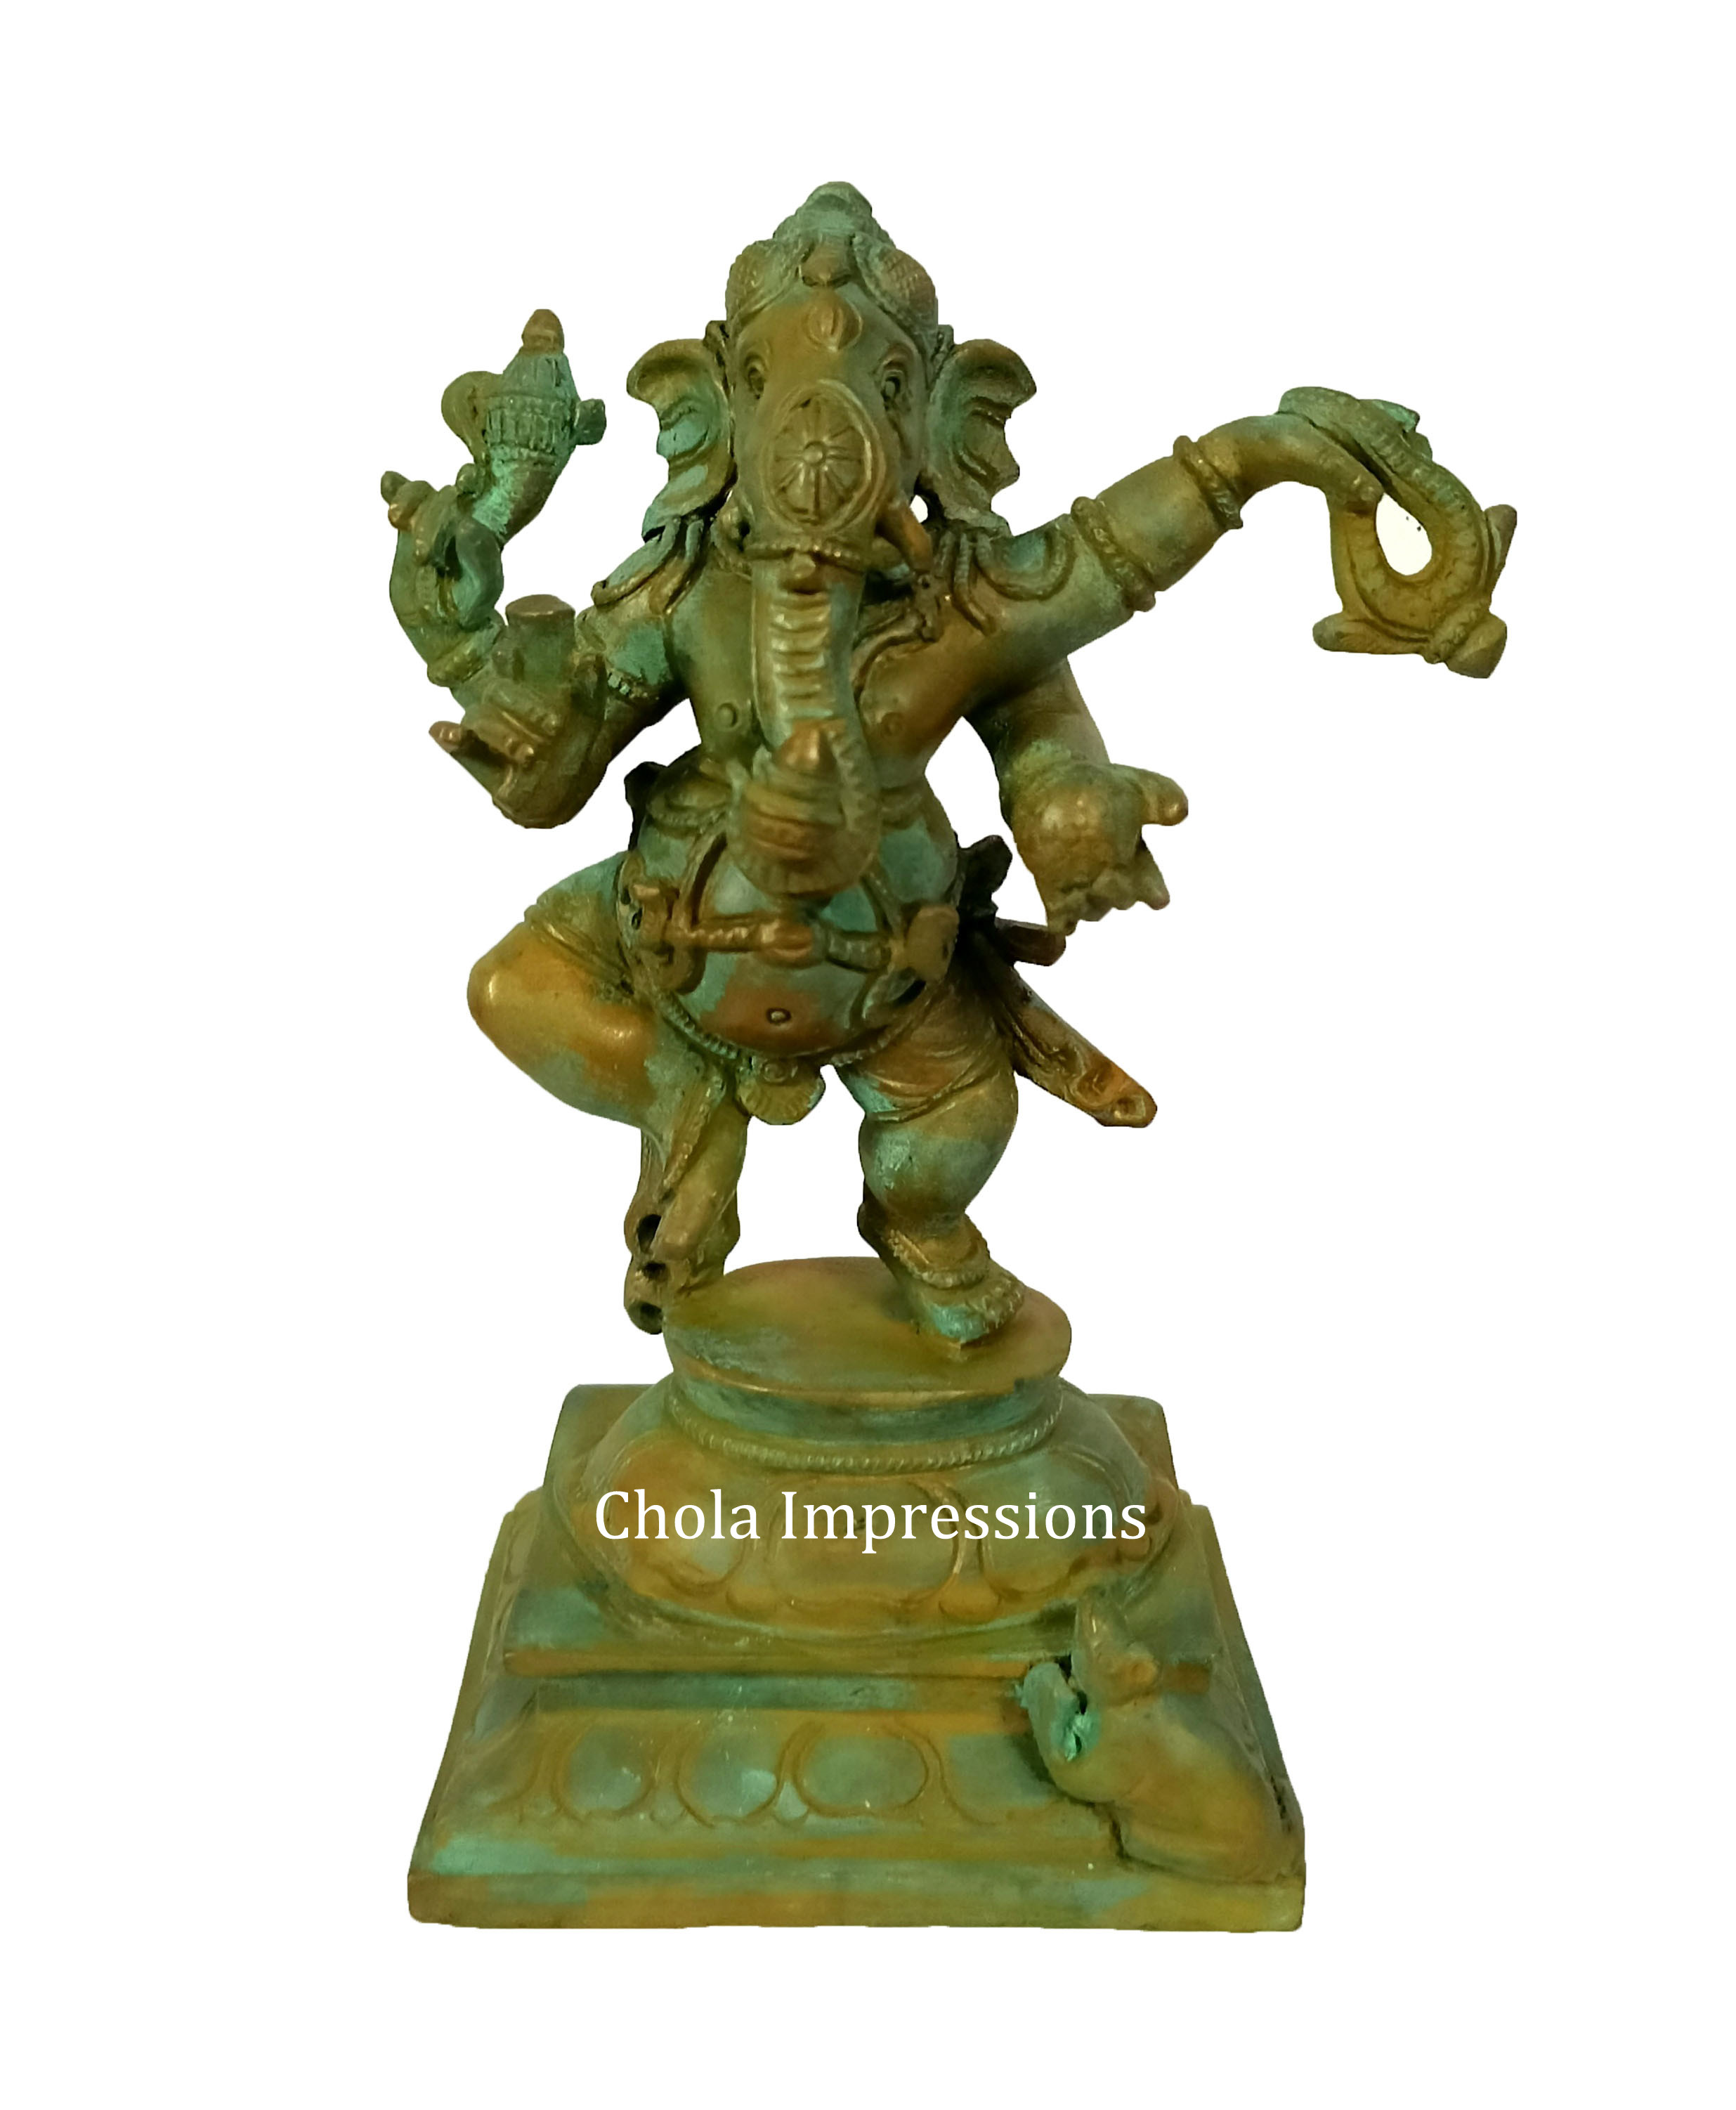 Dancing Ganesha Panchaloha Bronze Statue in Antique Finish - 6 inches